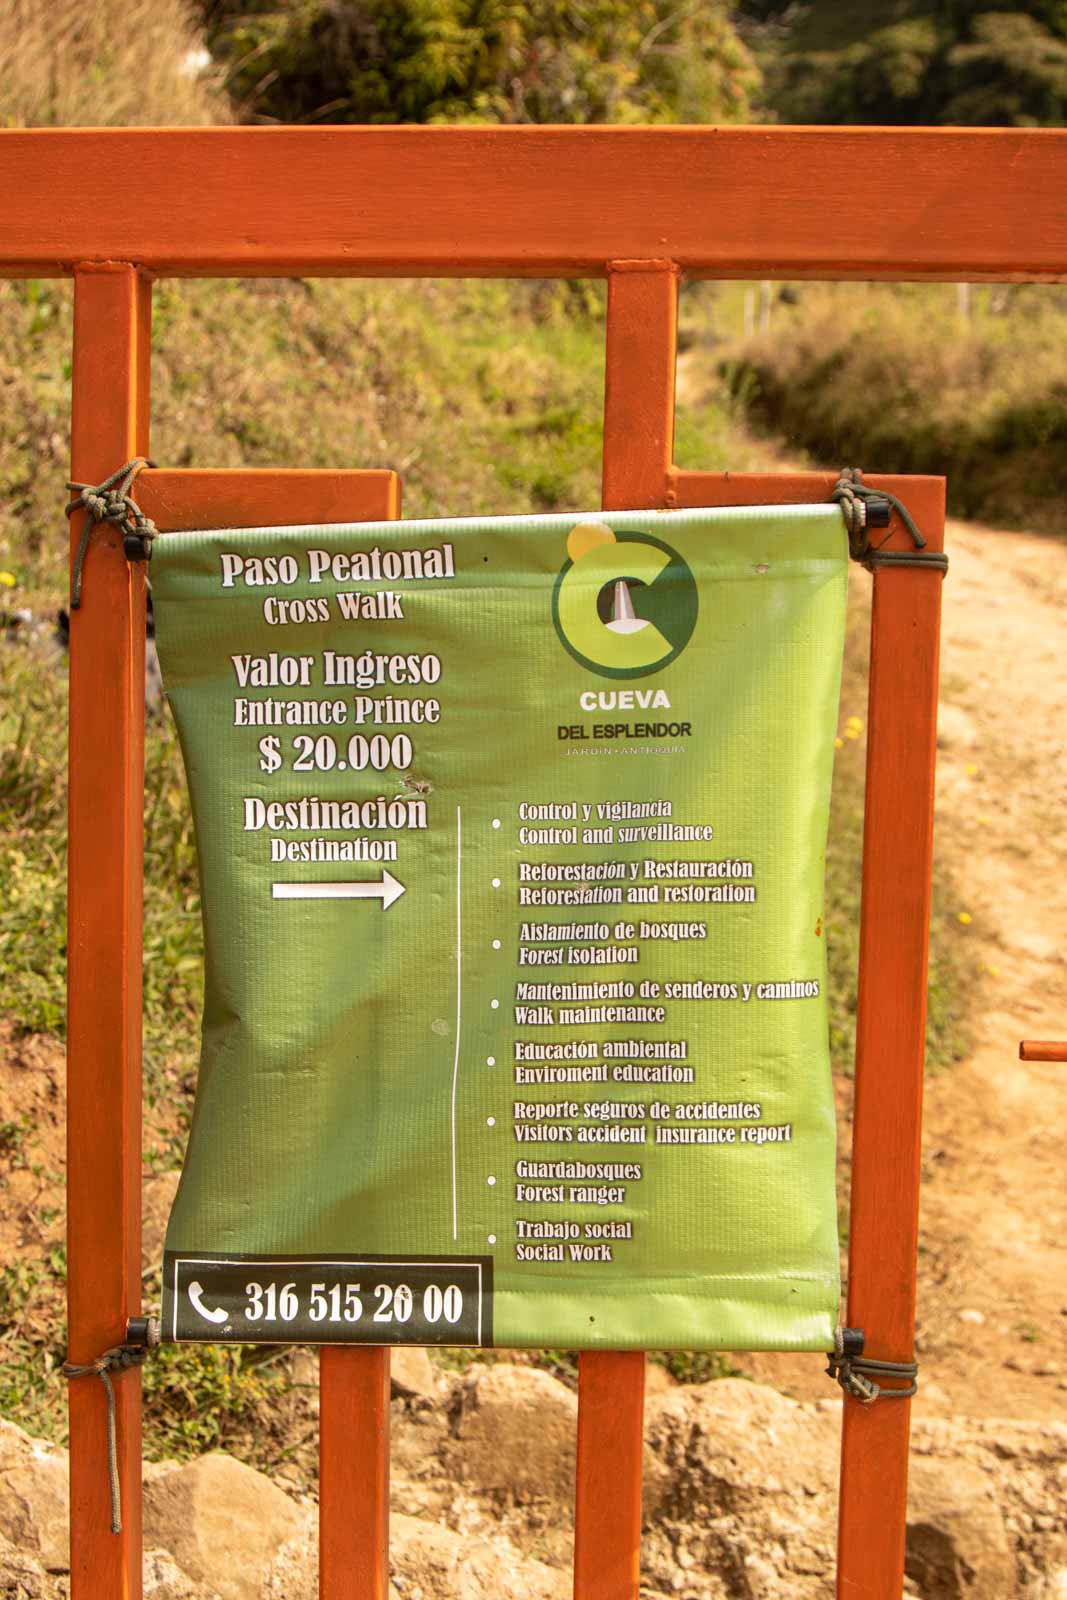 A sign showing payment information in La Cueva del Esplendor.